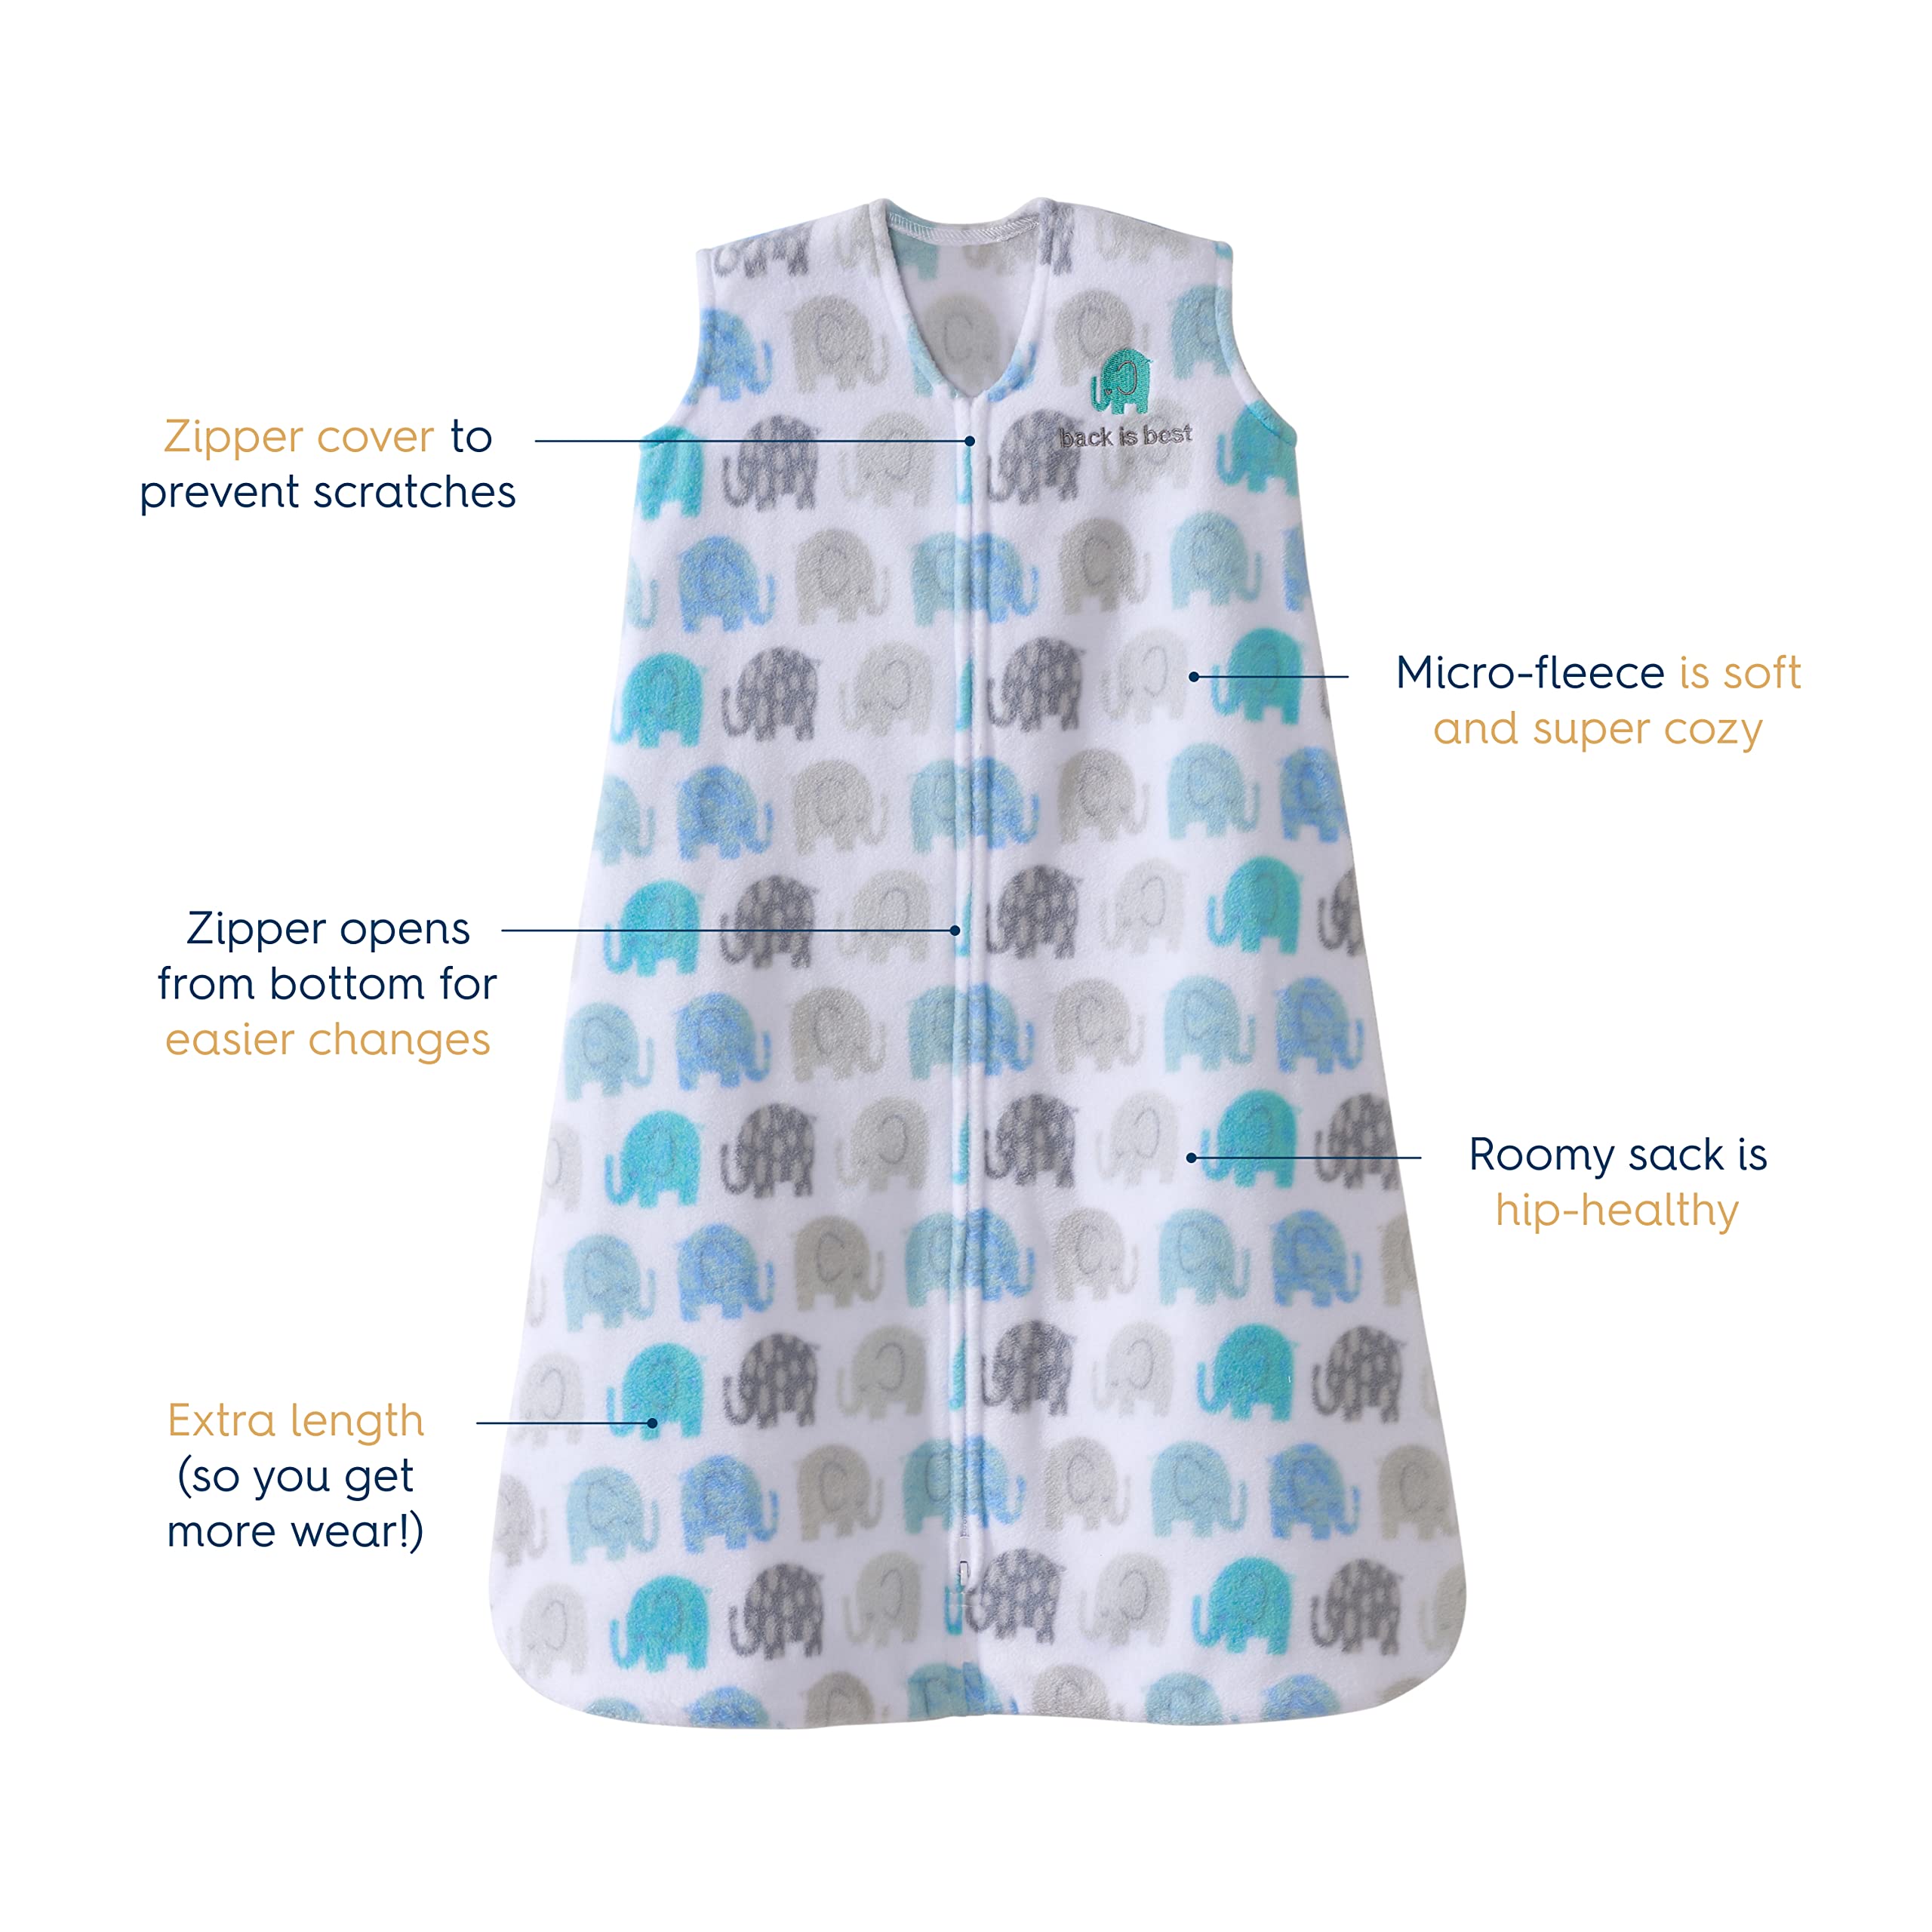 HALO Sleepsack, Micro-Fleece Wearable Blanket, Swaddle Transition Sleeping Bag, TOG 1.0, Elephant Texture, Large, 12-18 Months